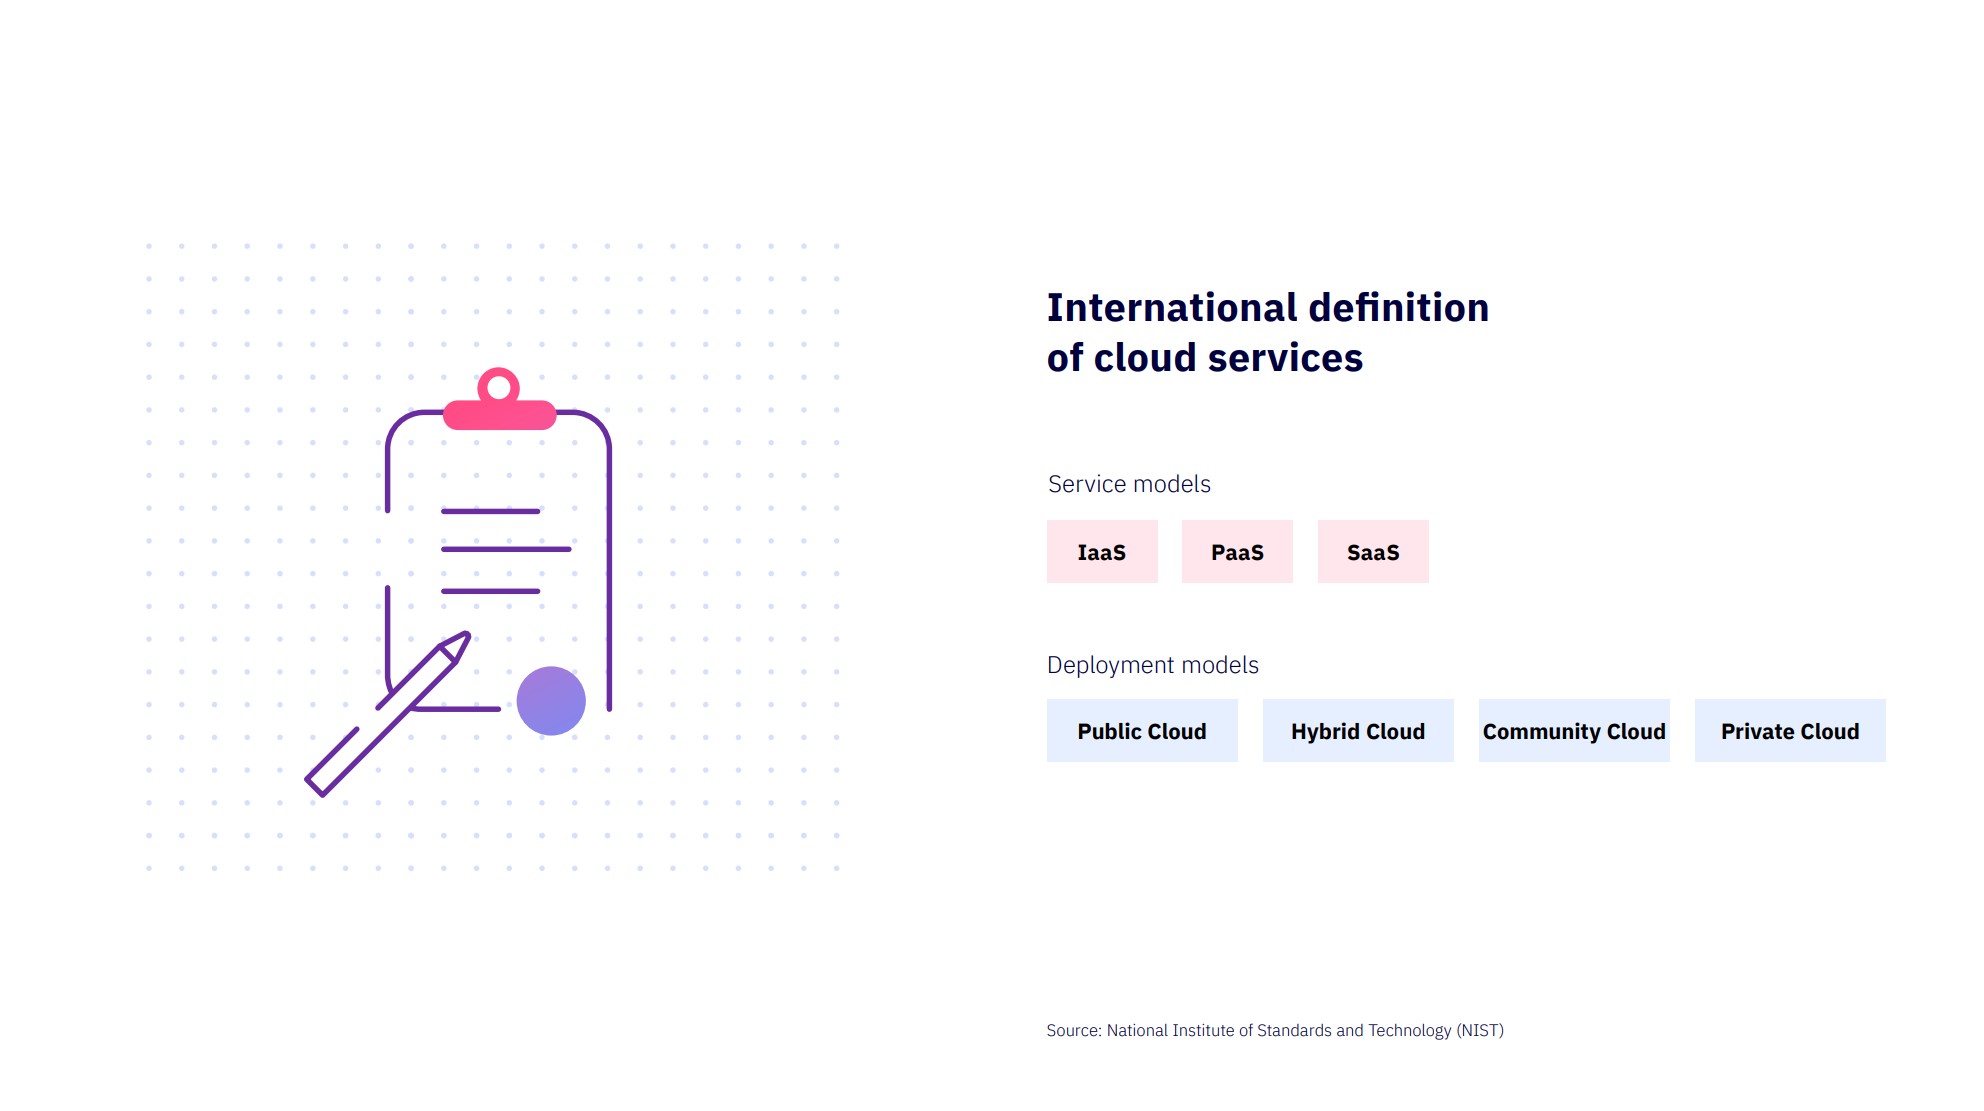 internatl def cloud services